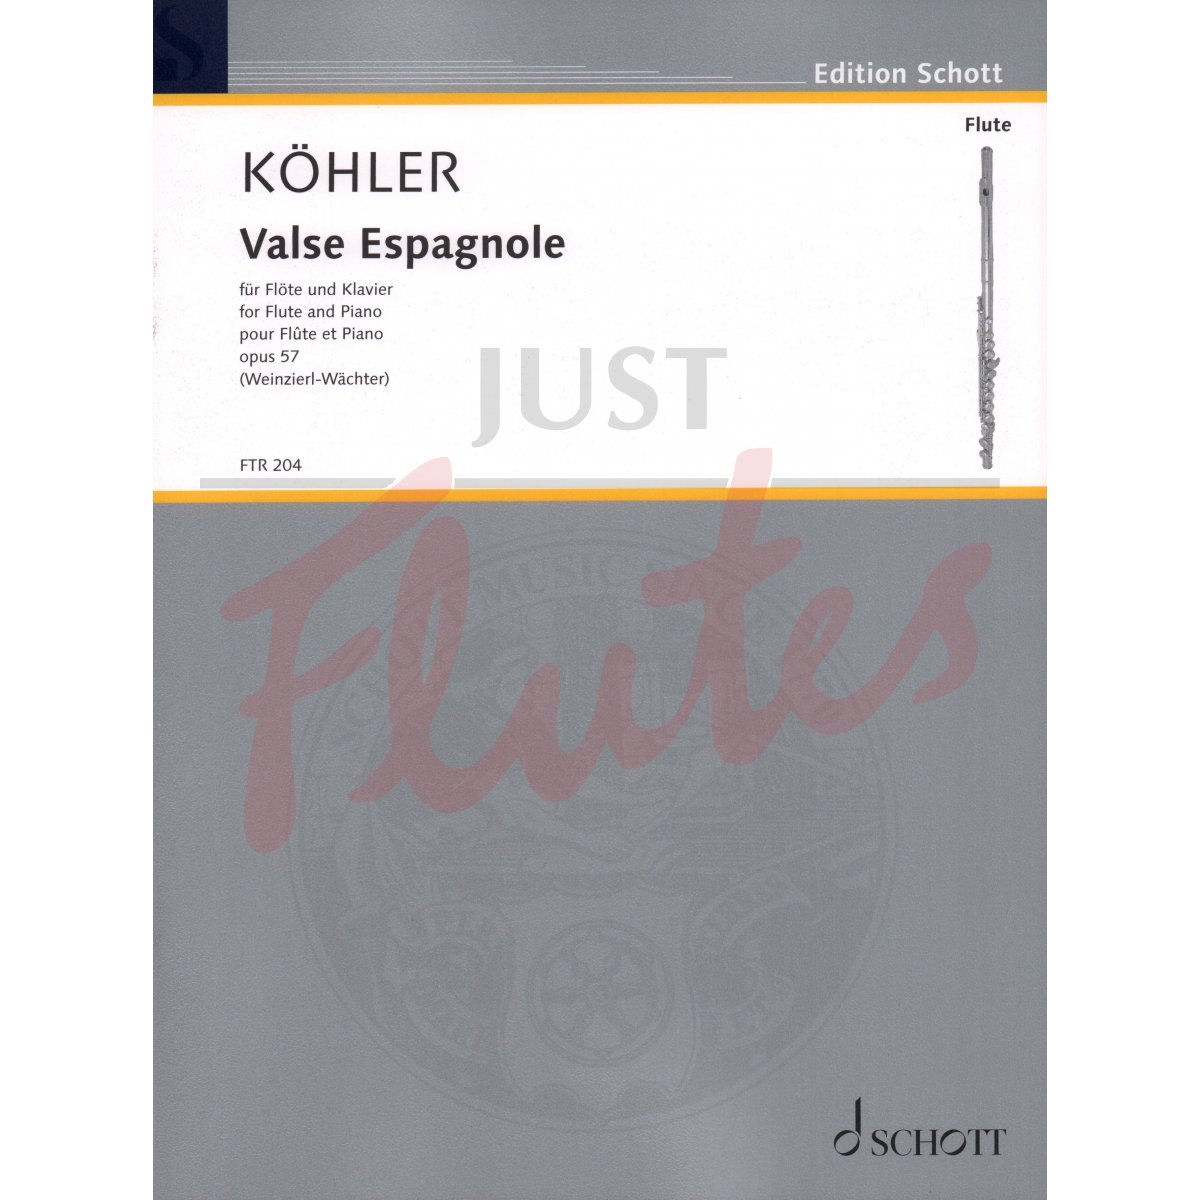 Valse Espagnole for Flute and Piano